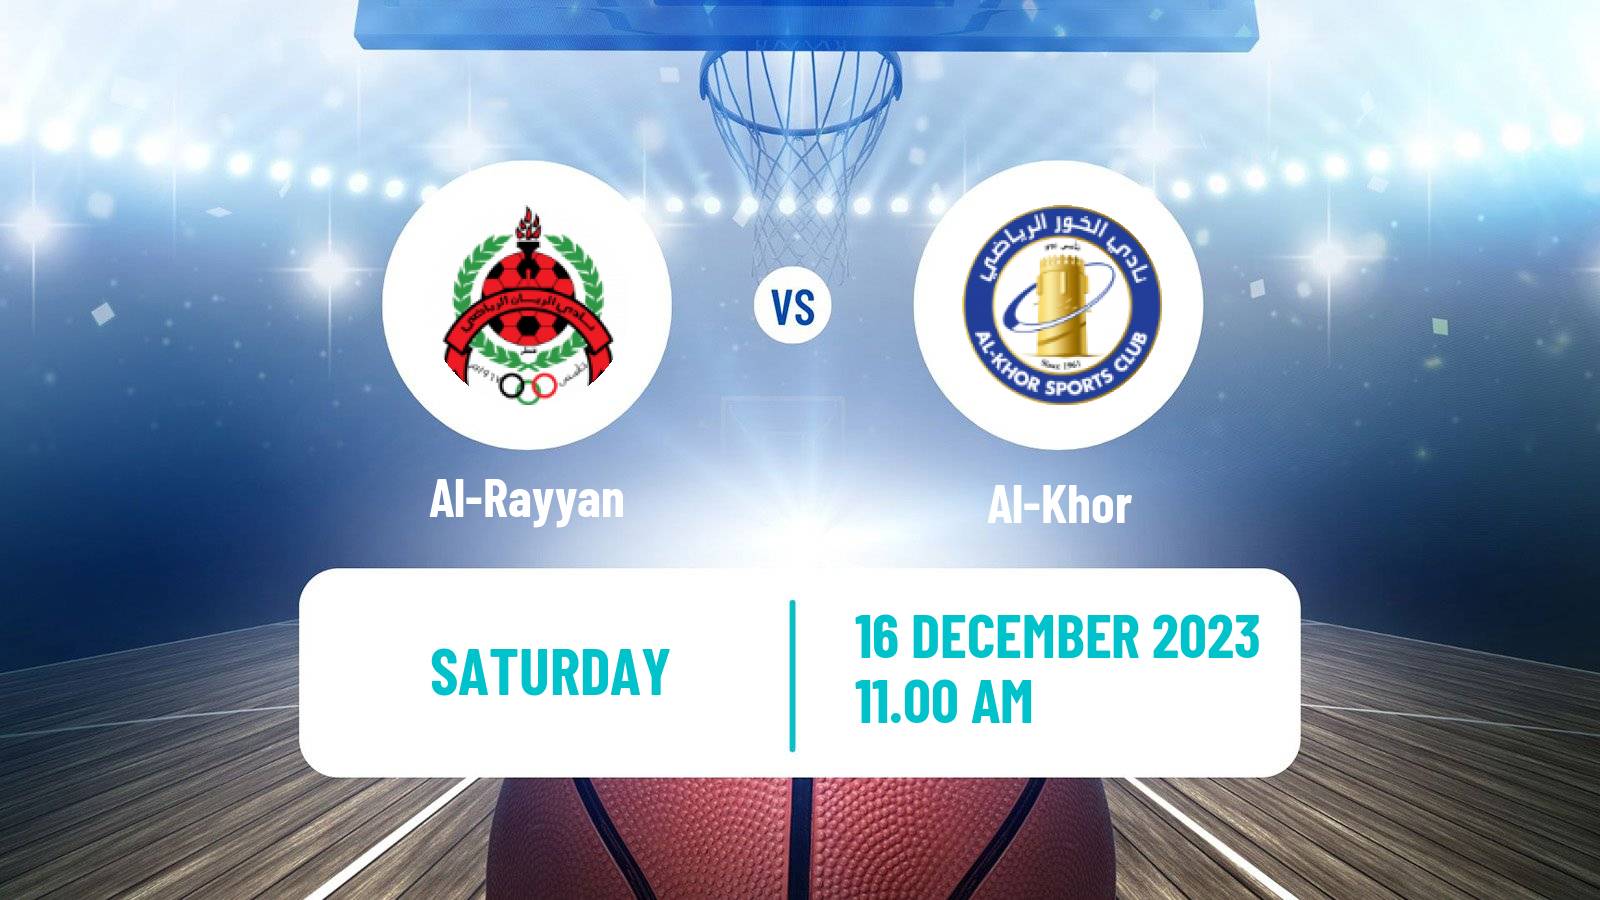 Basketball Qatar Basketball League Al-Rayyan - Al-Khor